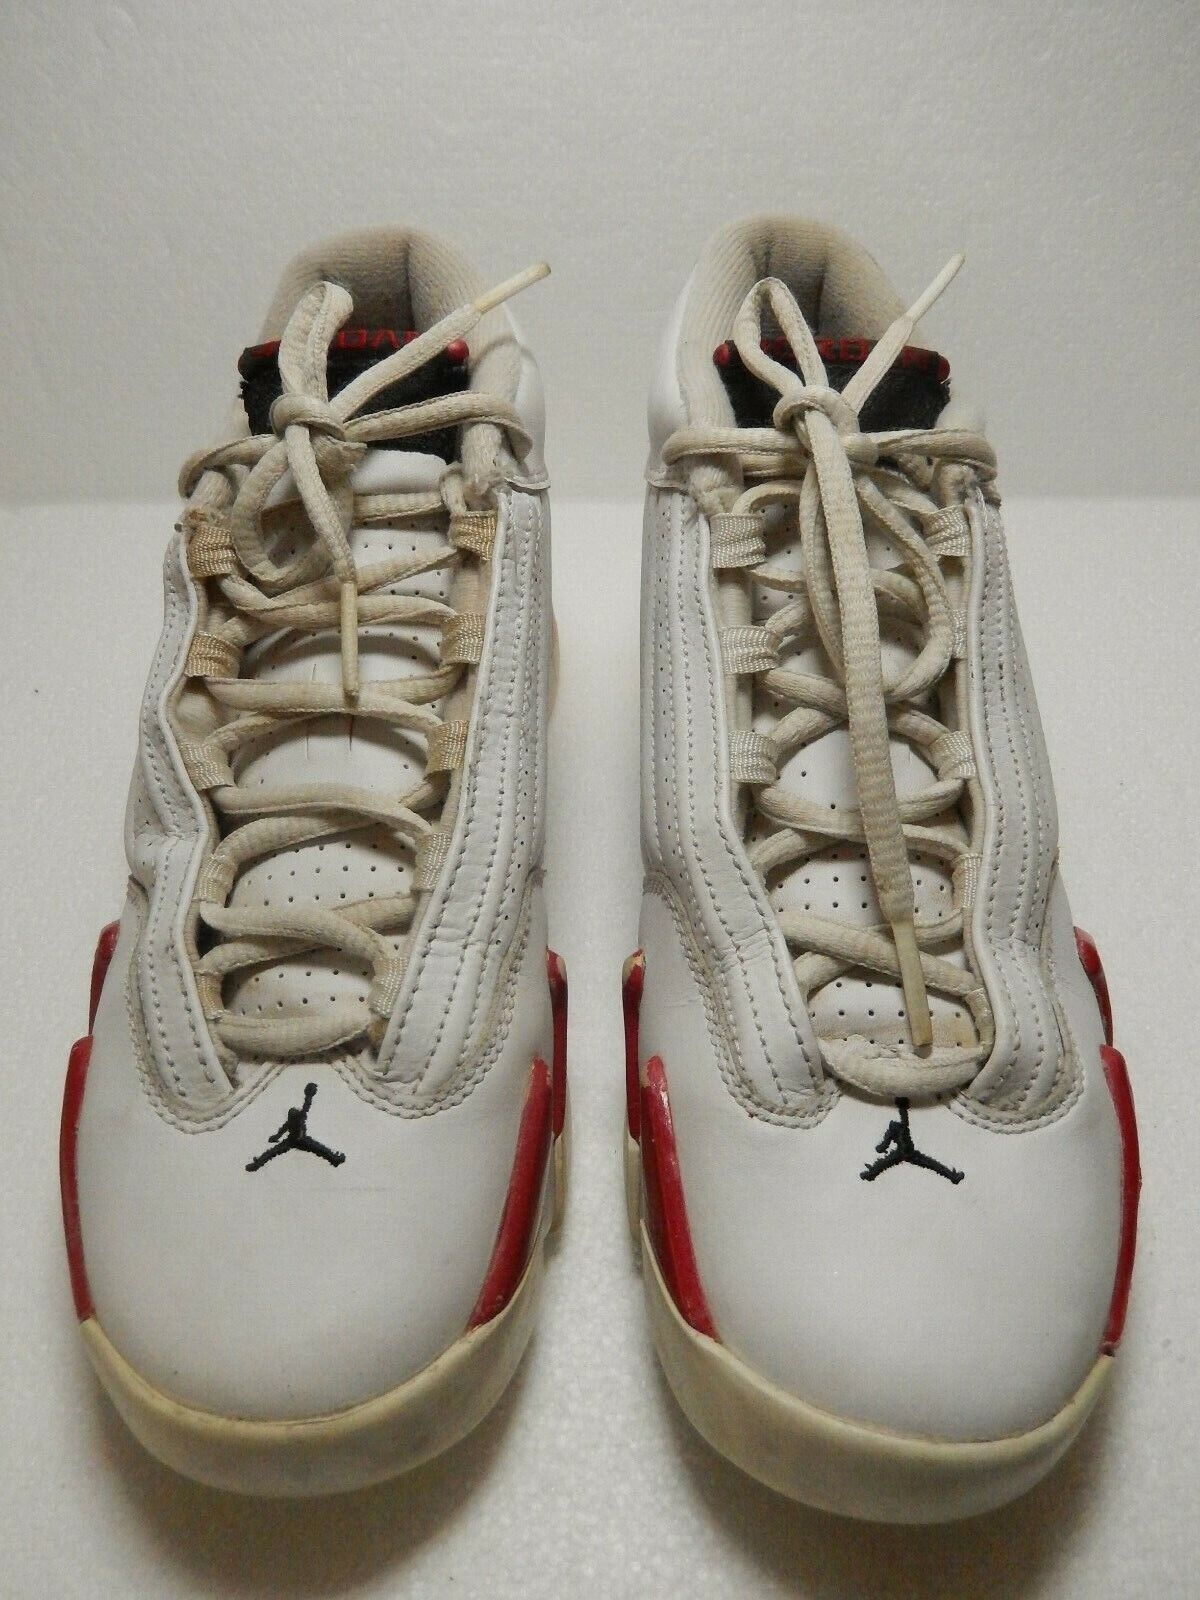 2011 Nike Air Jordan 14 XIV Retro GS Candy Cane White Red Size 5.5Y (487524-101)